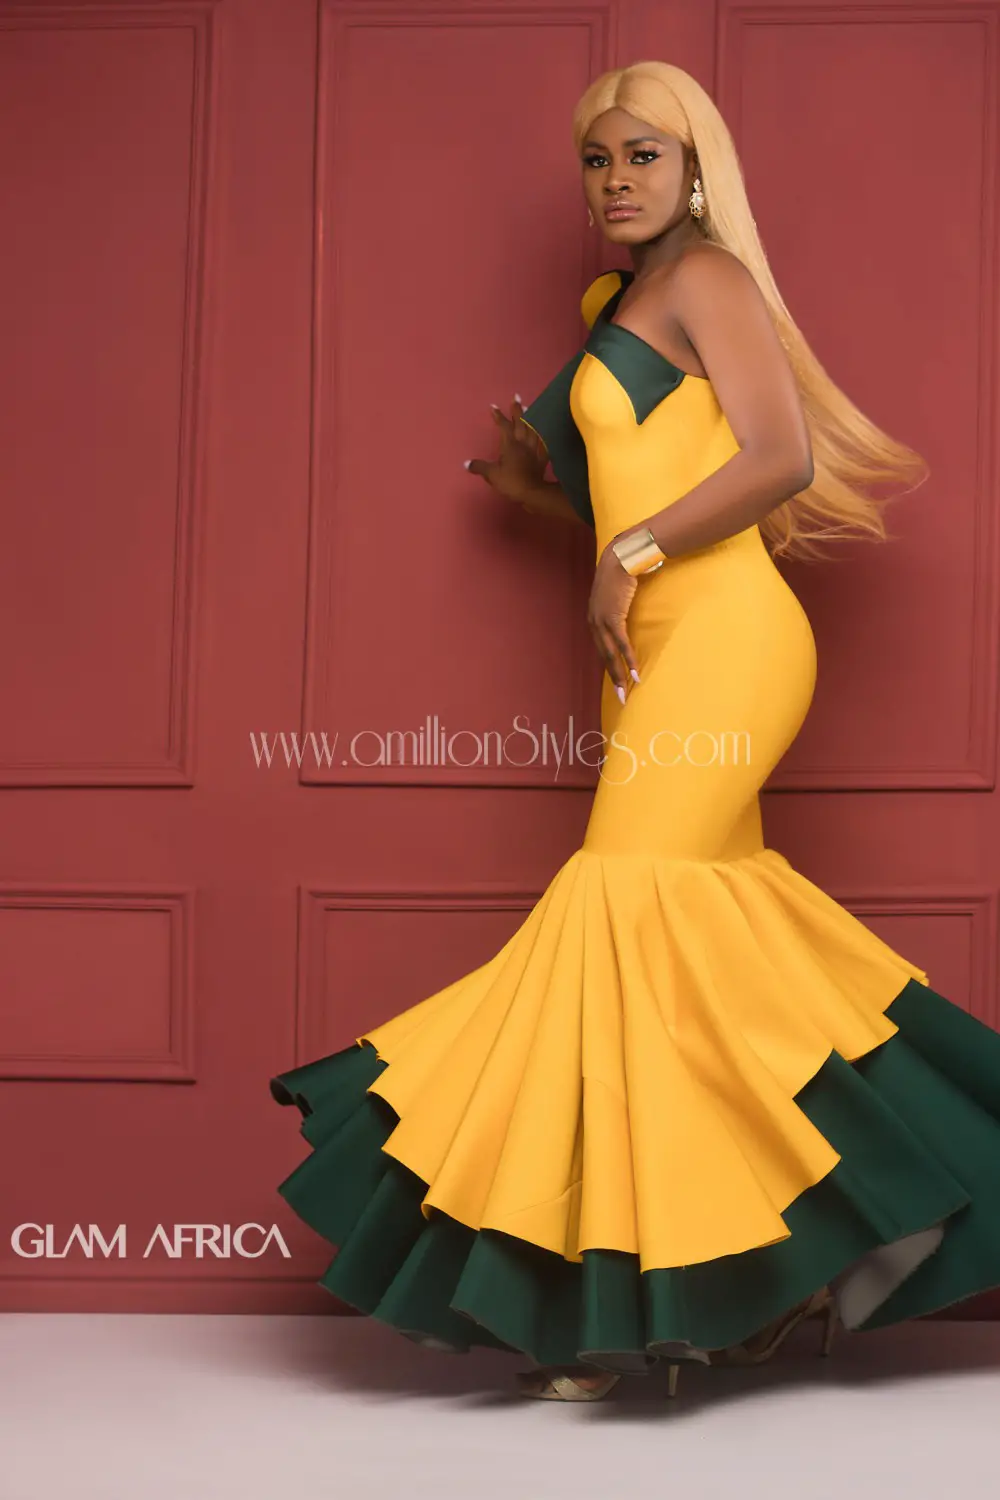 Bbnaija 2018 Girls Stun On The Cover Of Glam Africa Magazine